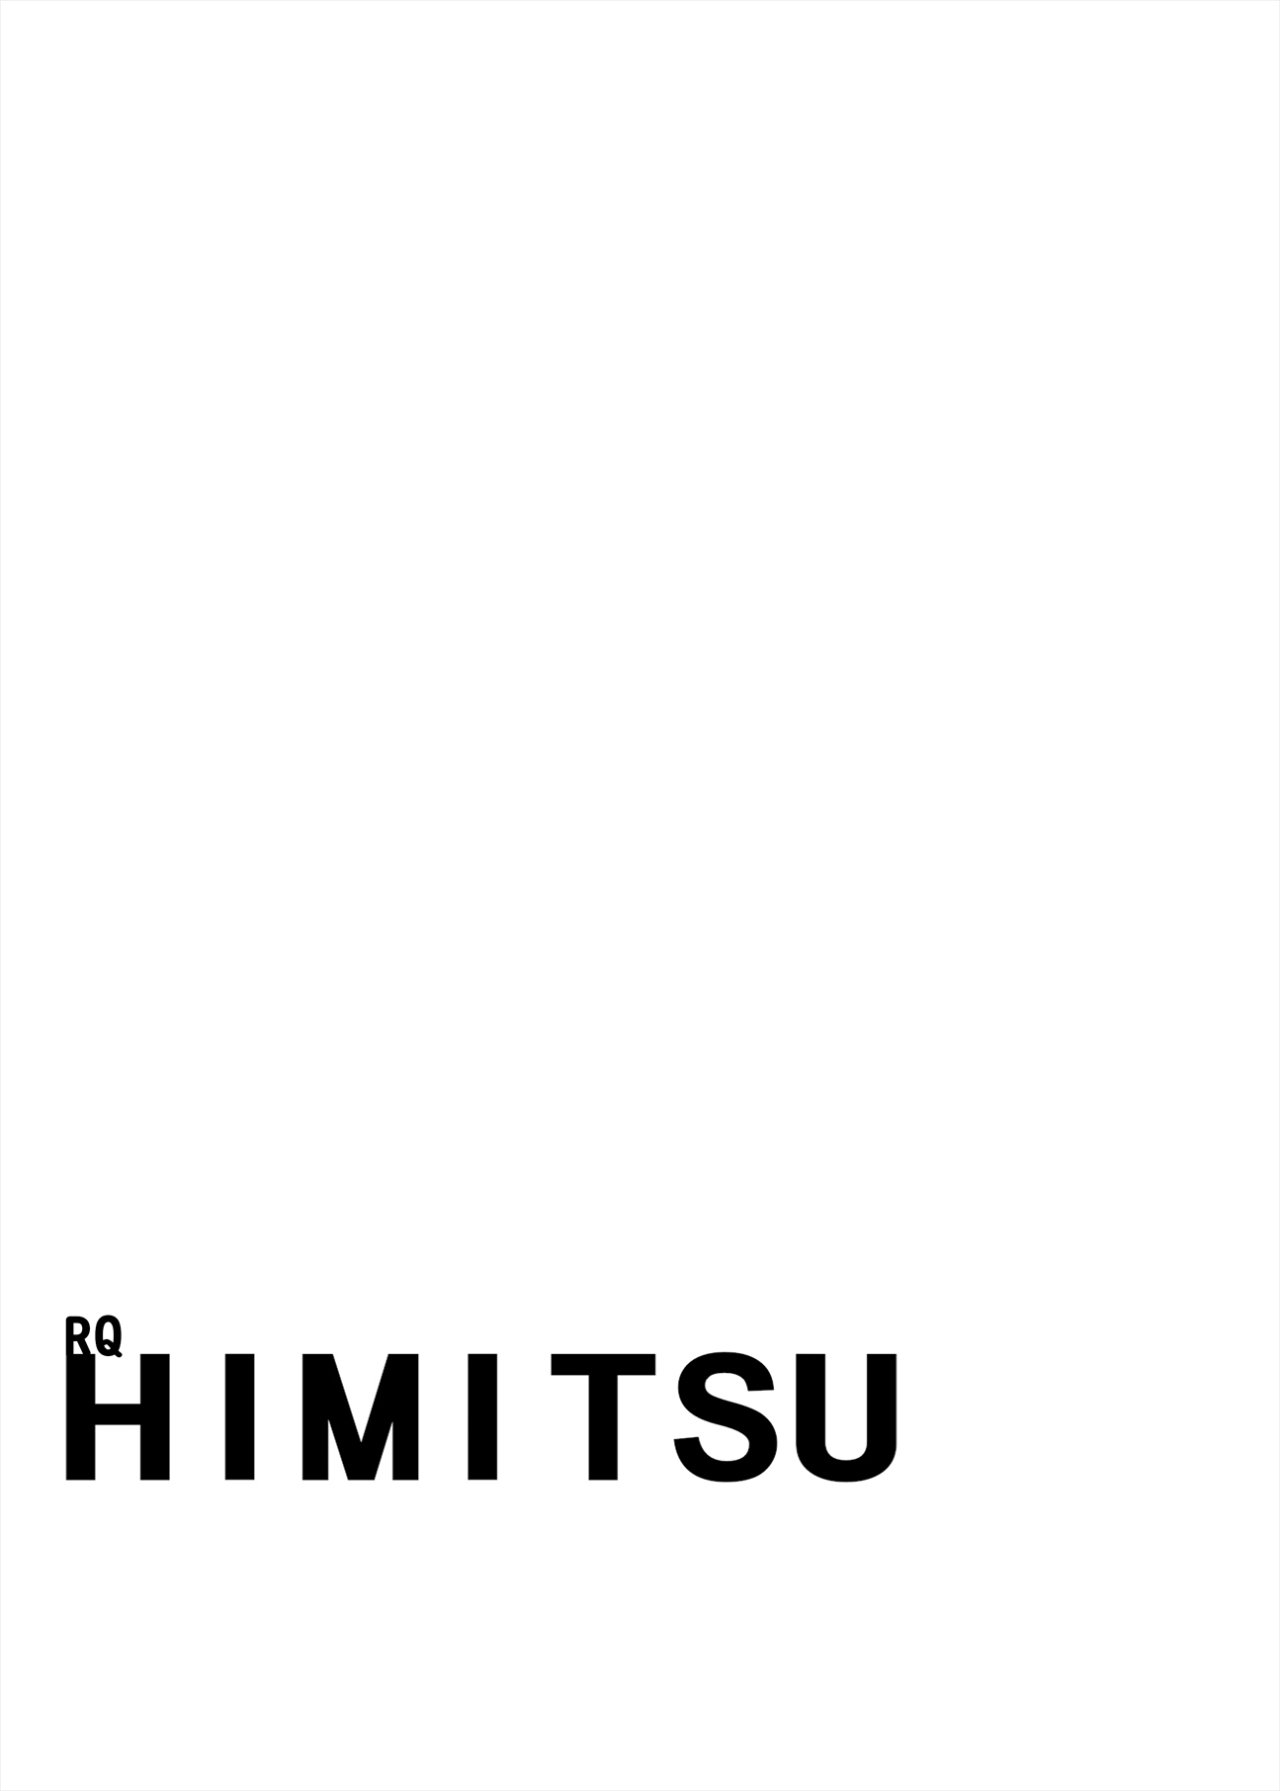 HIMITSU by Rq - 1